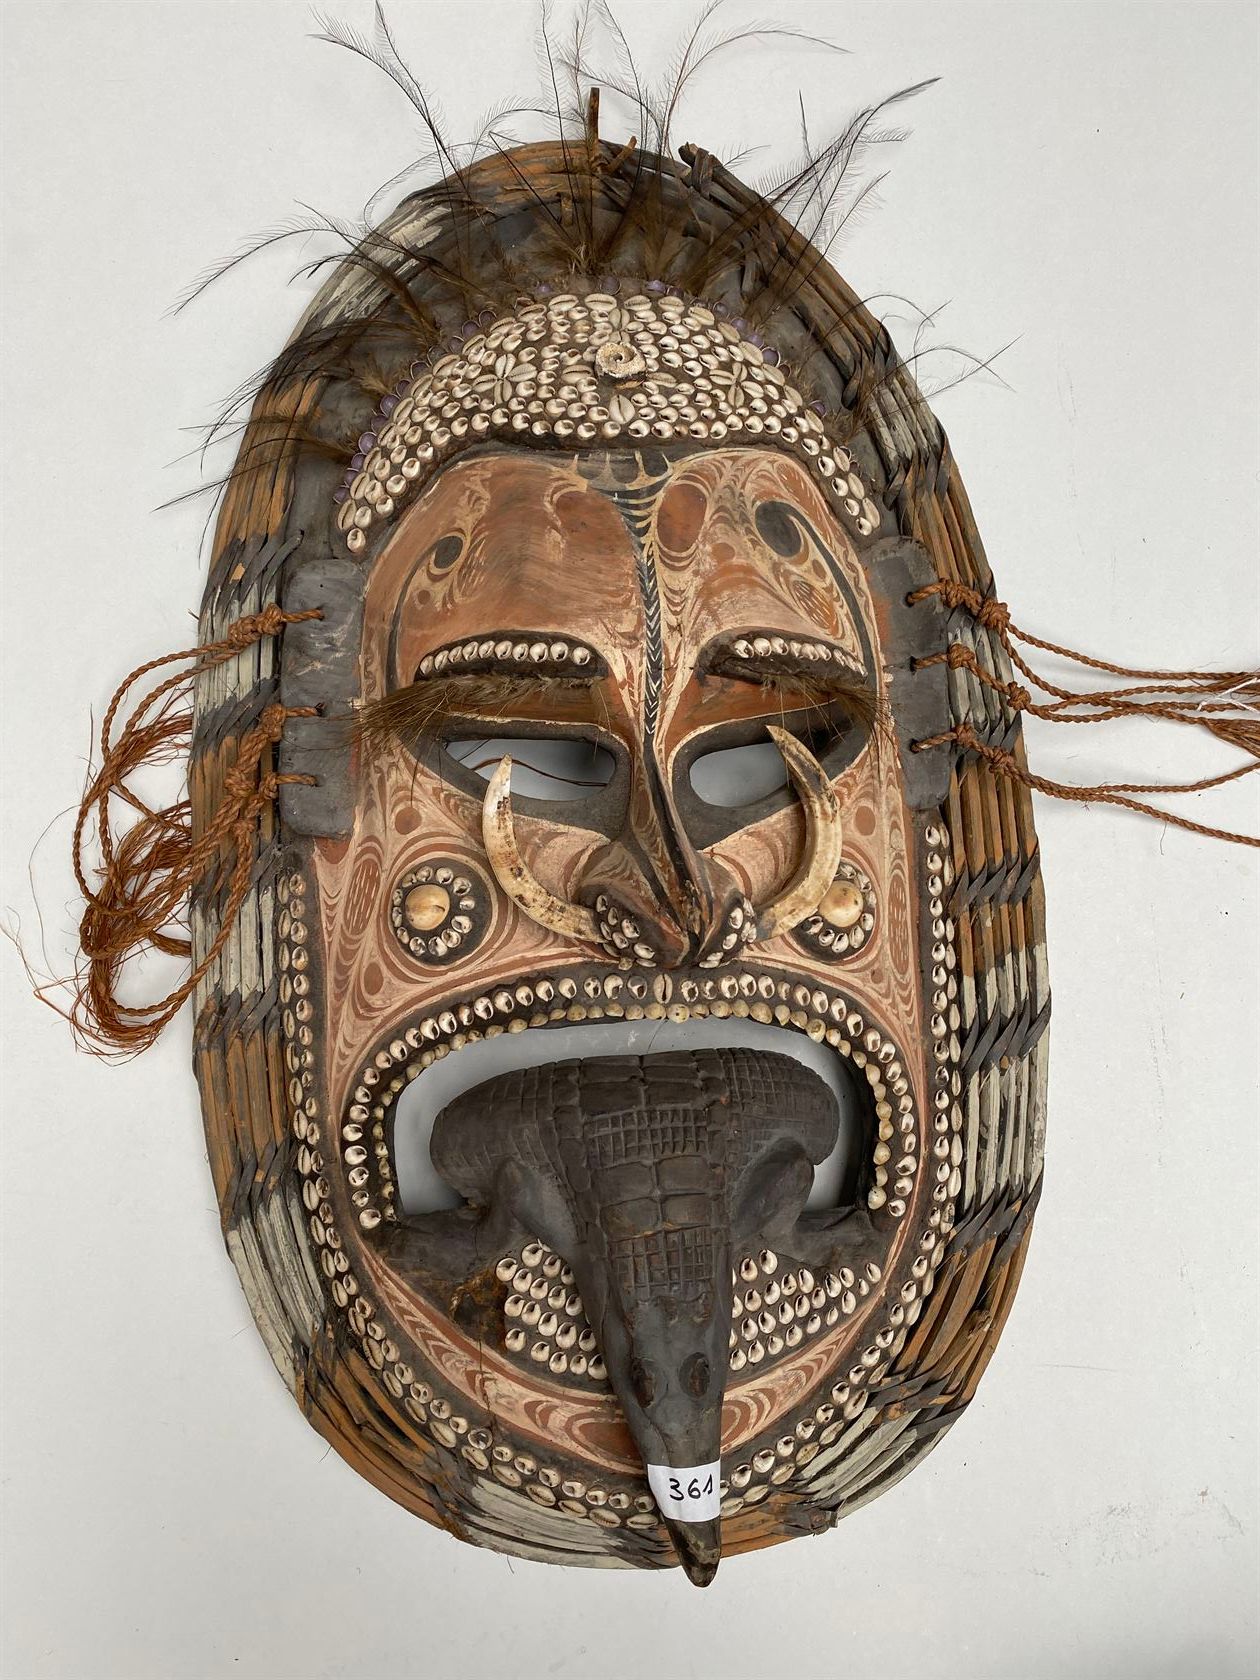 Null Savi "防护面具，舌头伸出，呈鳄鱼形状。木材、纤维、贝壳、多色性、野猪獠牙。巴布亚新几内亚Mindimbit，高70厘米。